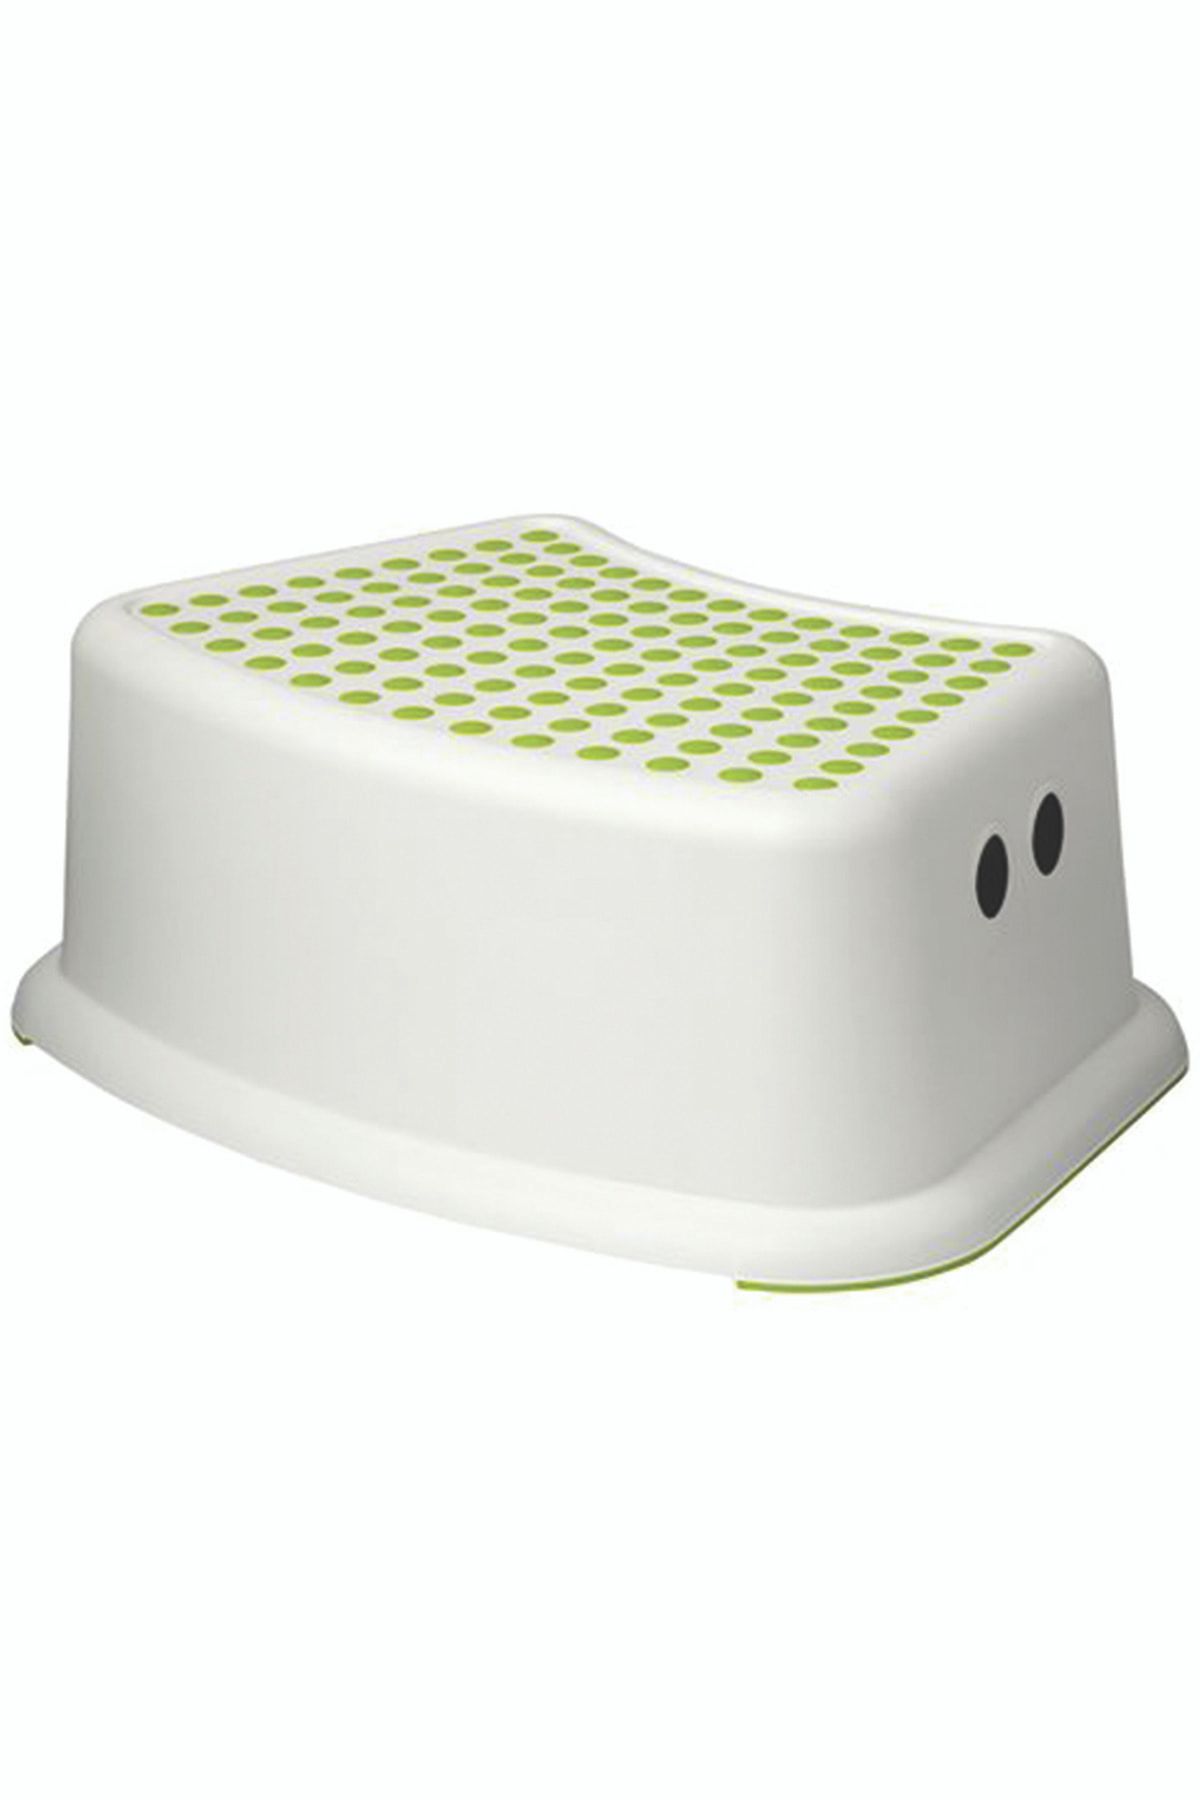 IKEA , Kaymaz Banyo Çocuk Banyo Yükseltici Basamak, Yeşil-beyaz